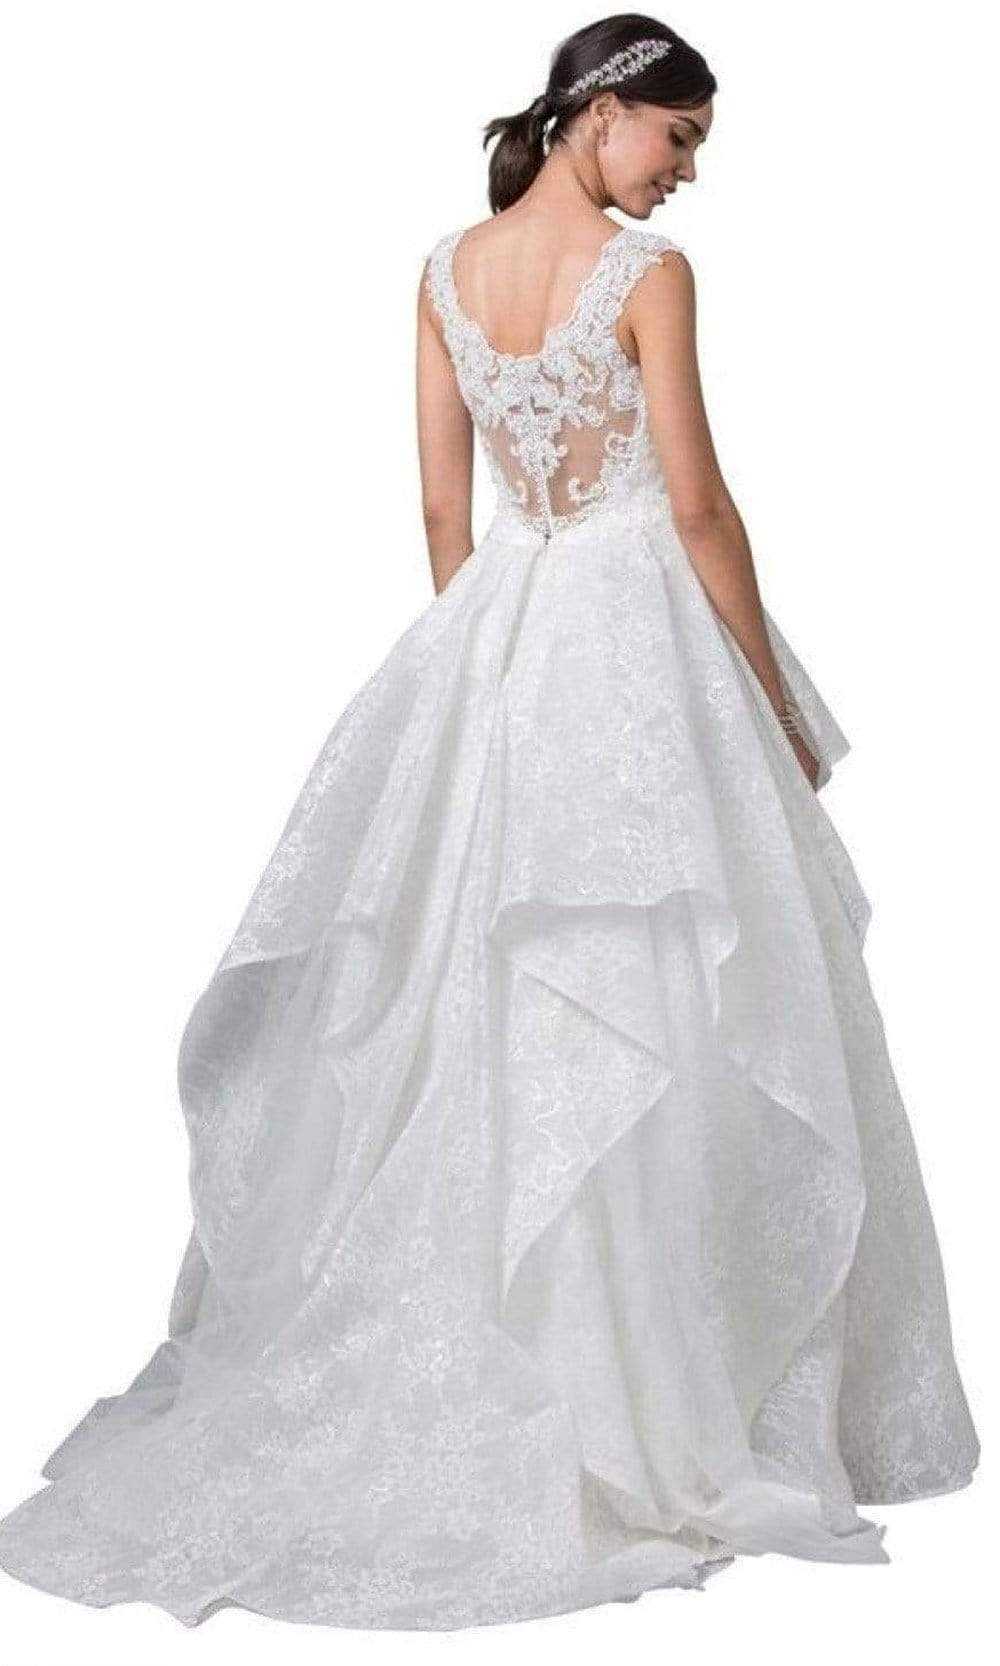 Aspeed Bridal, Aspeed Bridal - W2375 Lace Floral Layered Wedding Dress